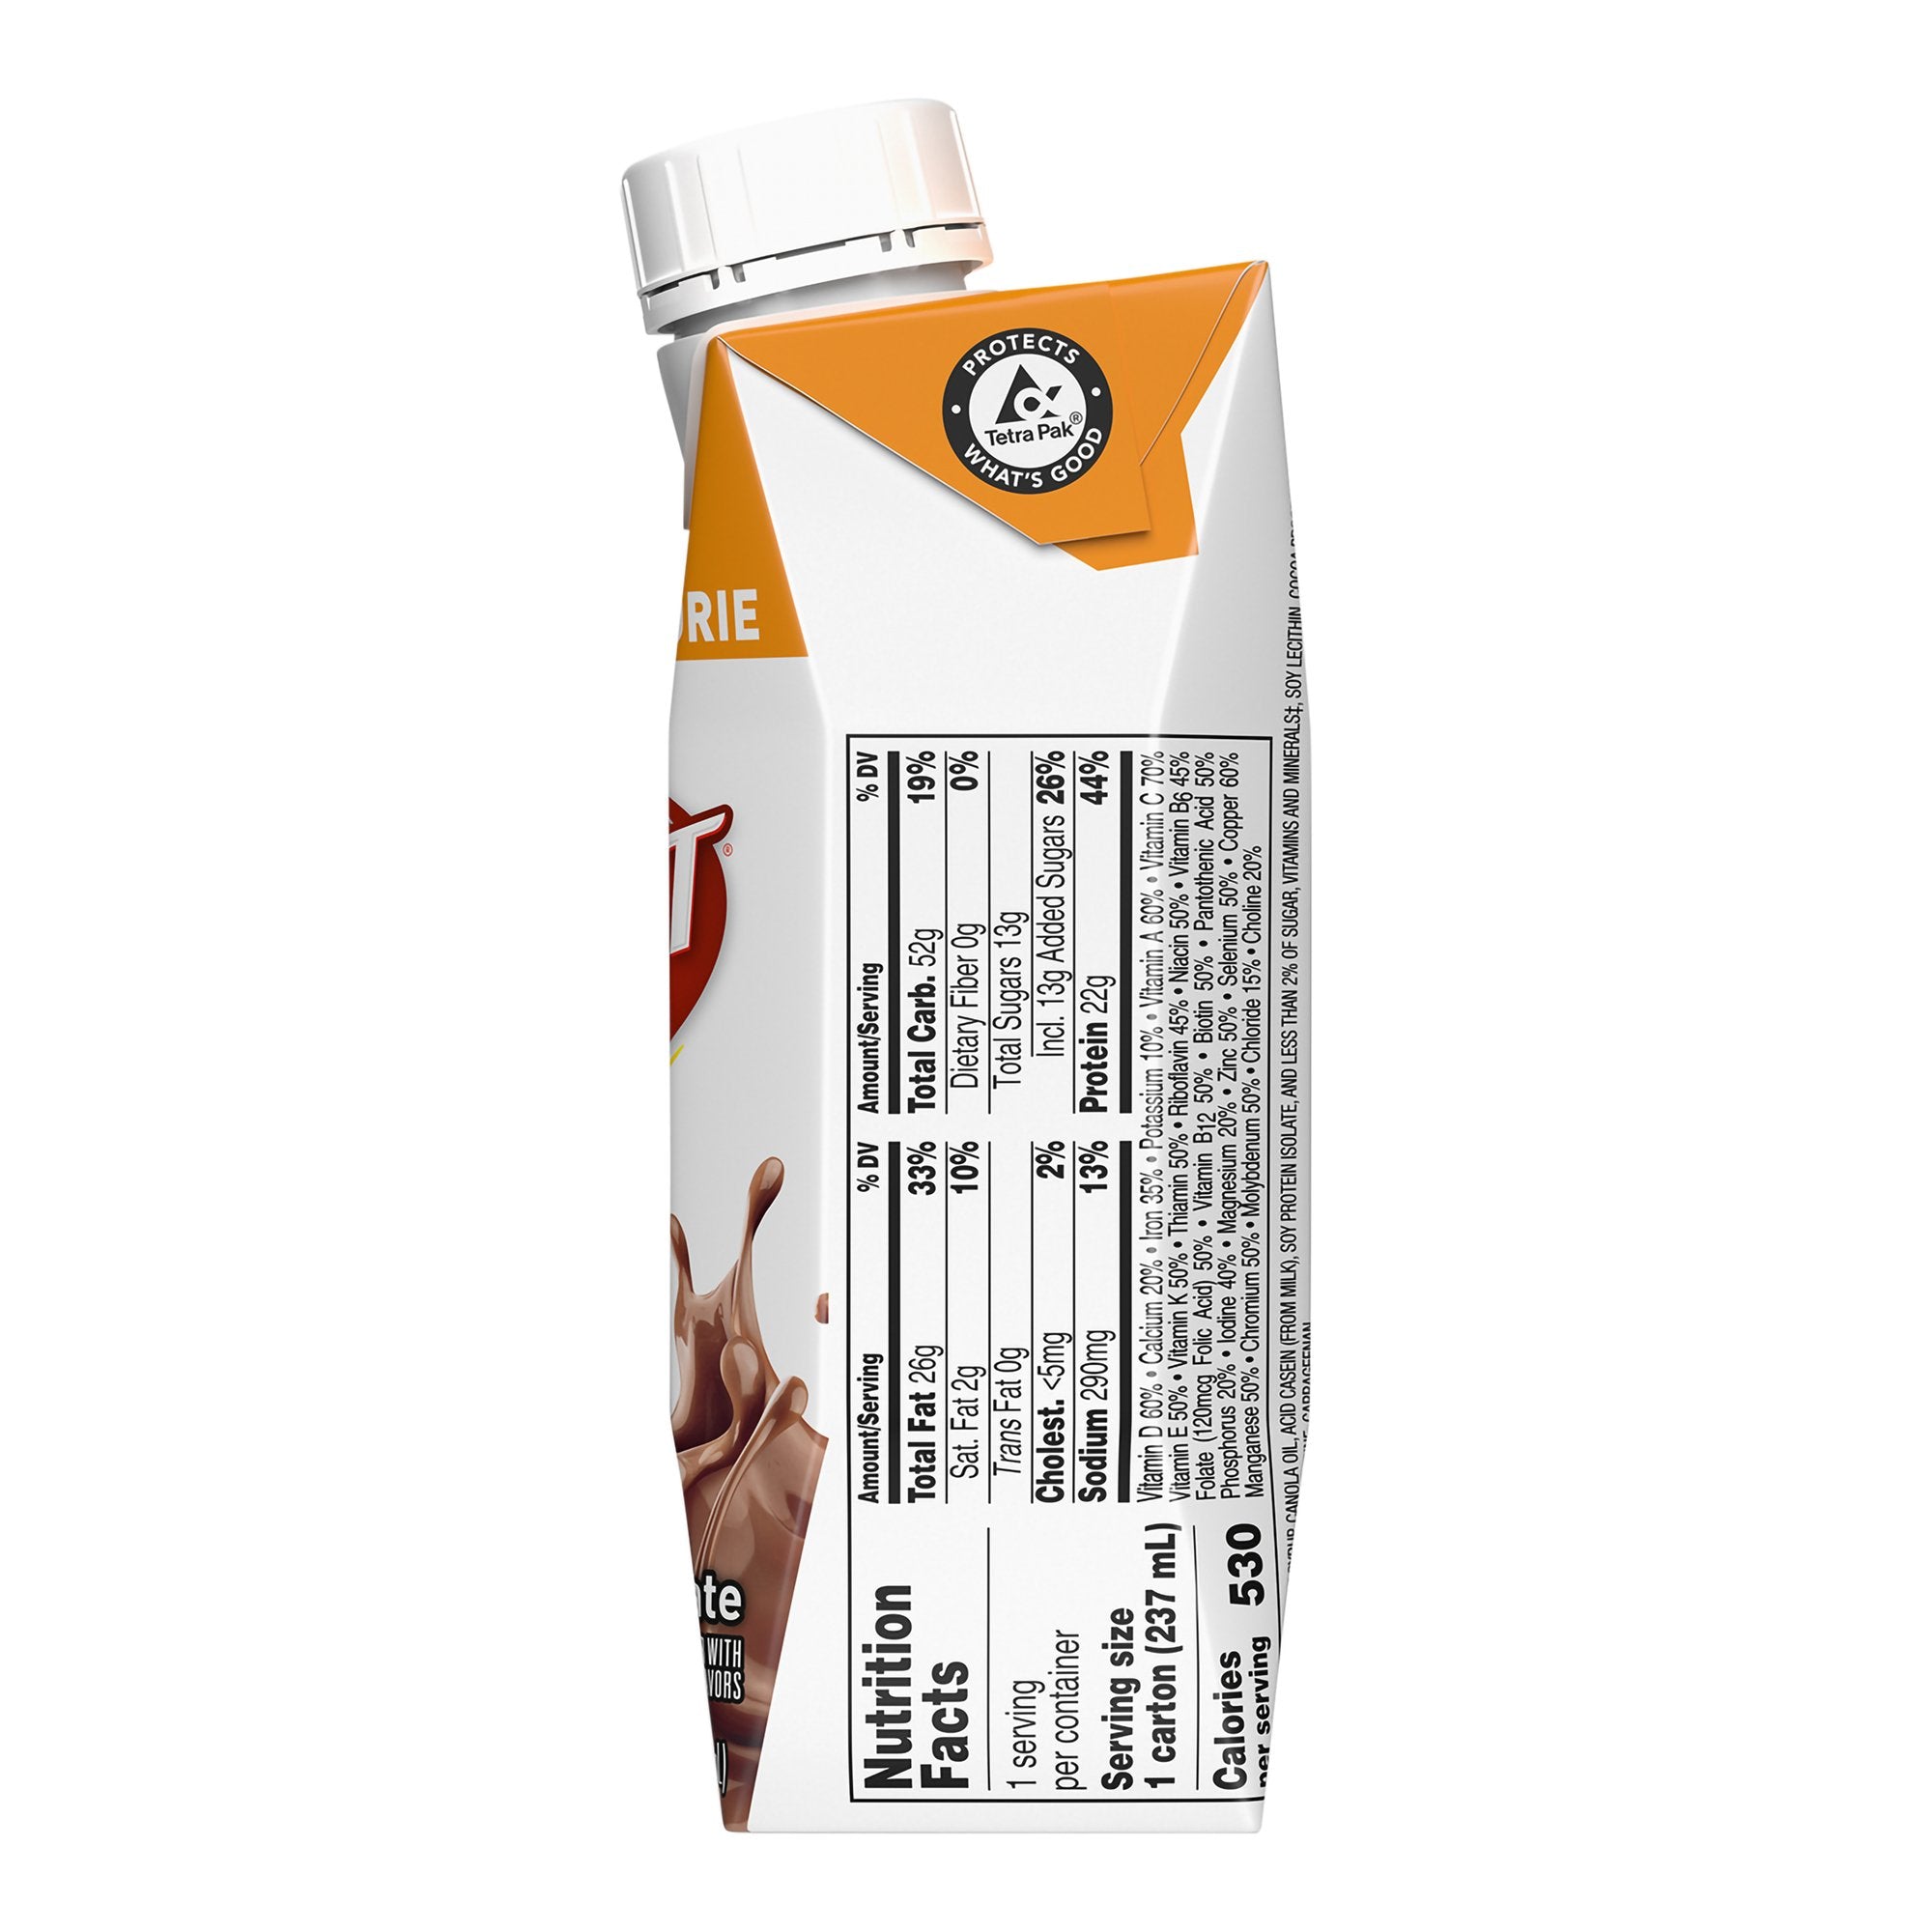 Oral Supplement Boost Very High Calorie Chocolate Flavor Liquid 8 oz. Reclosable Carton